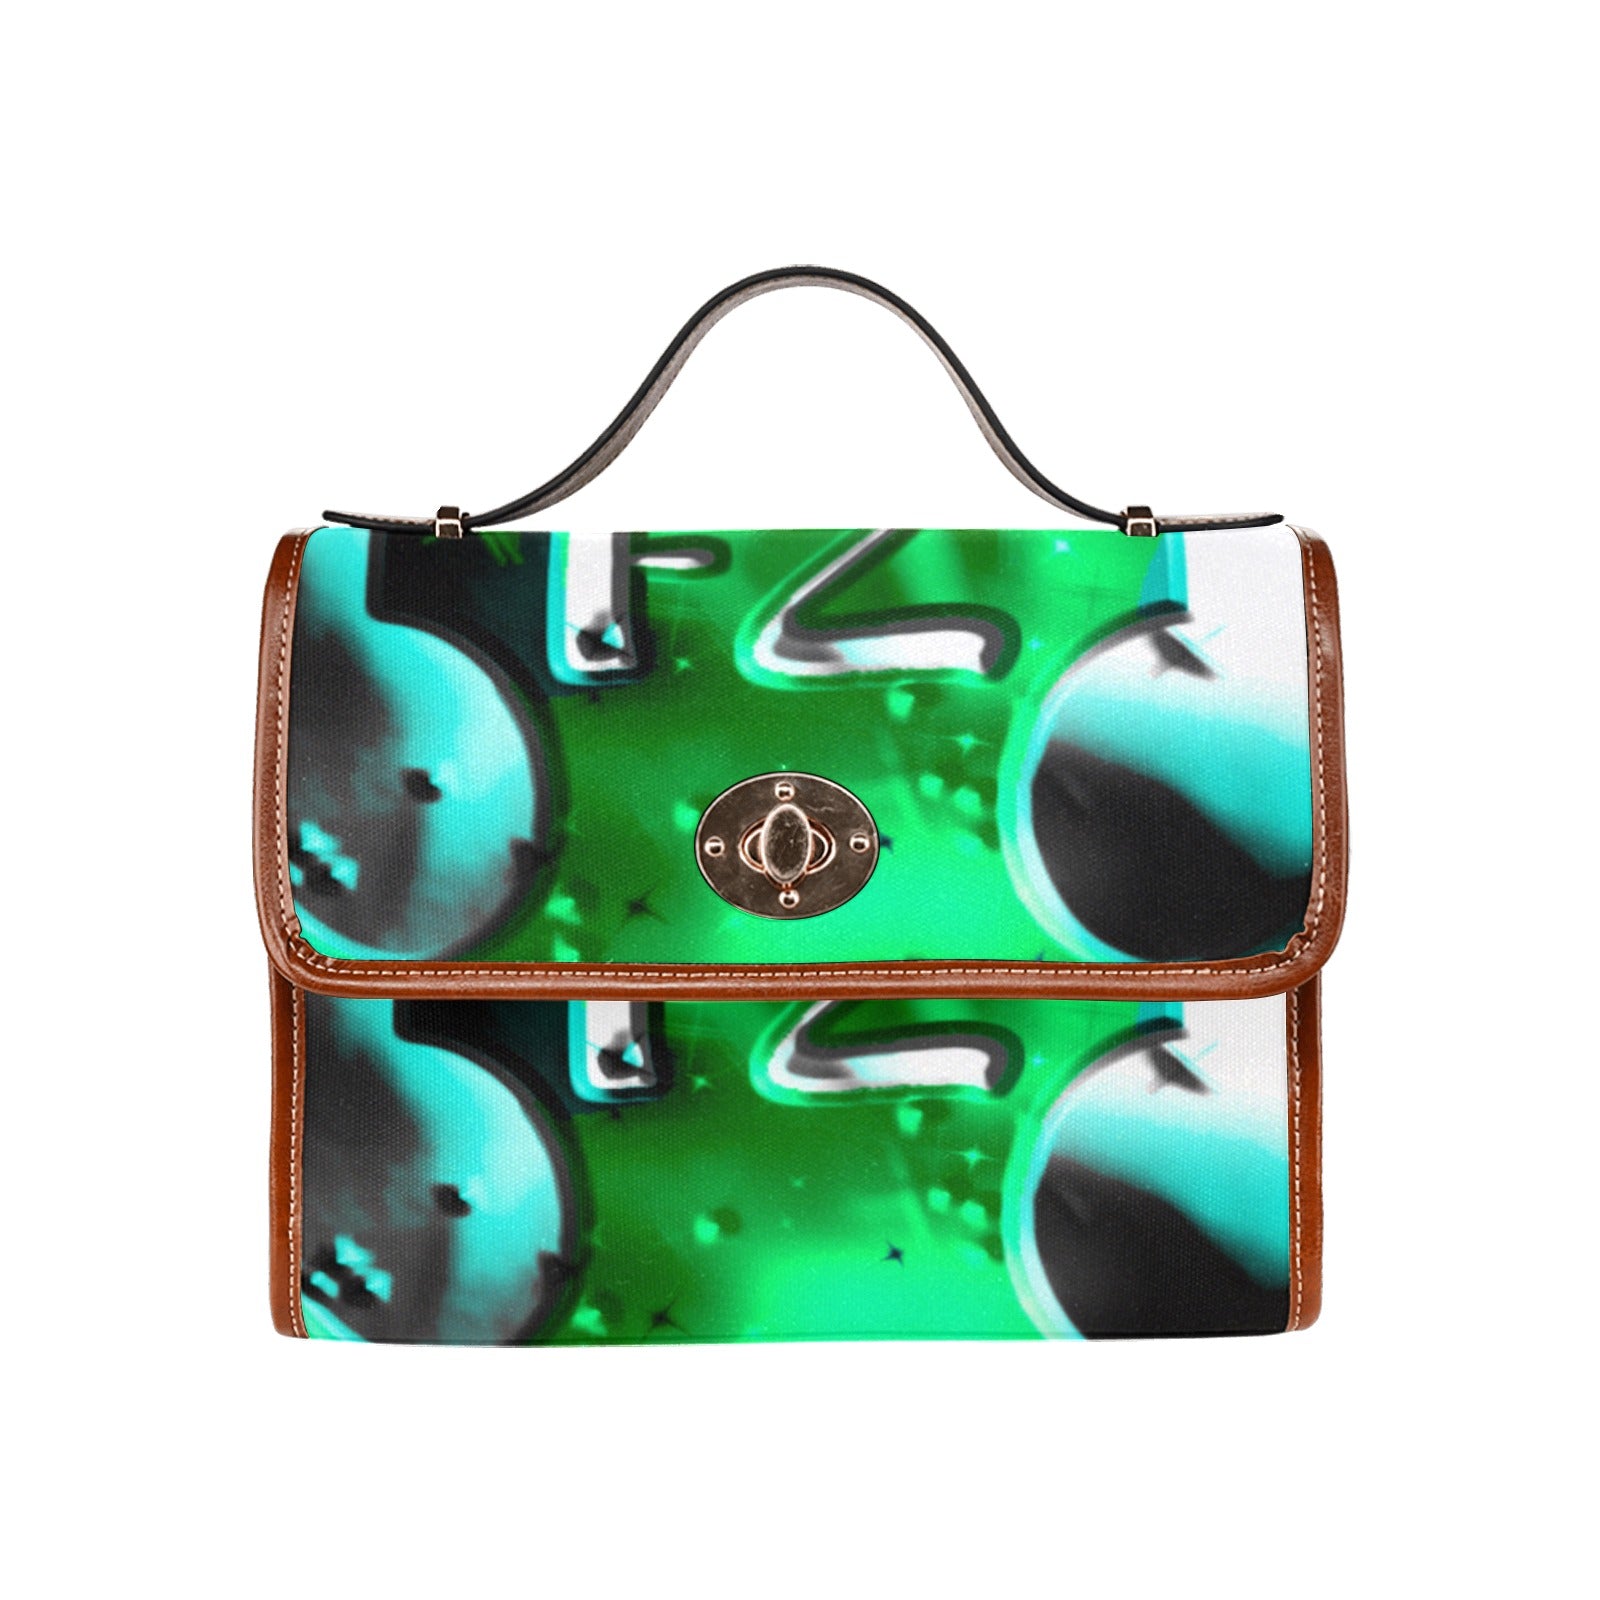 fz green abstract handbag all over print waterproof canvas bag(model1641)(brown strap)